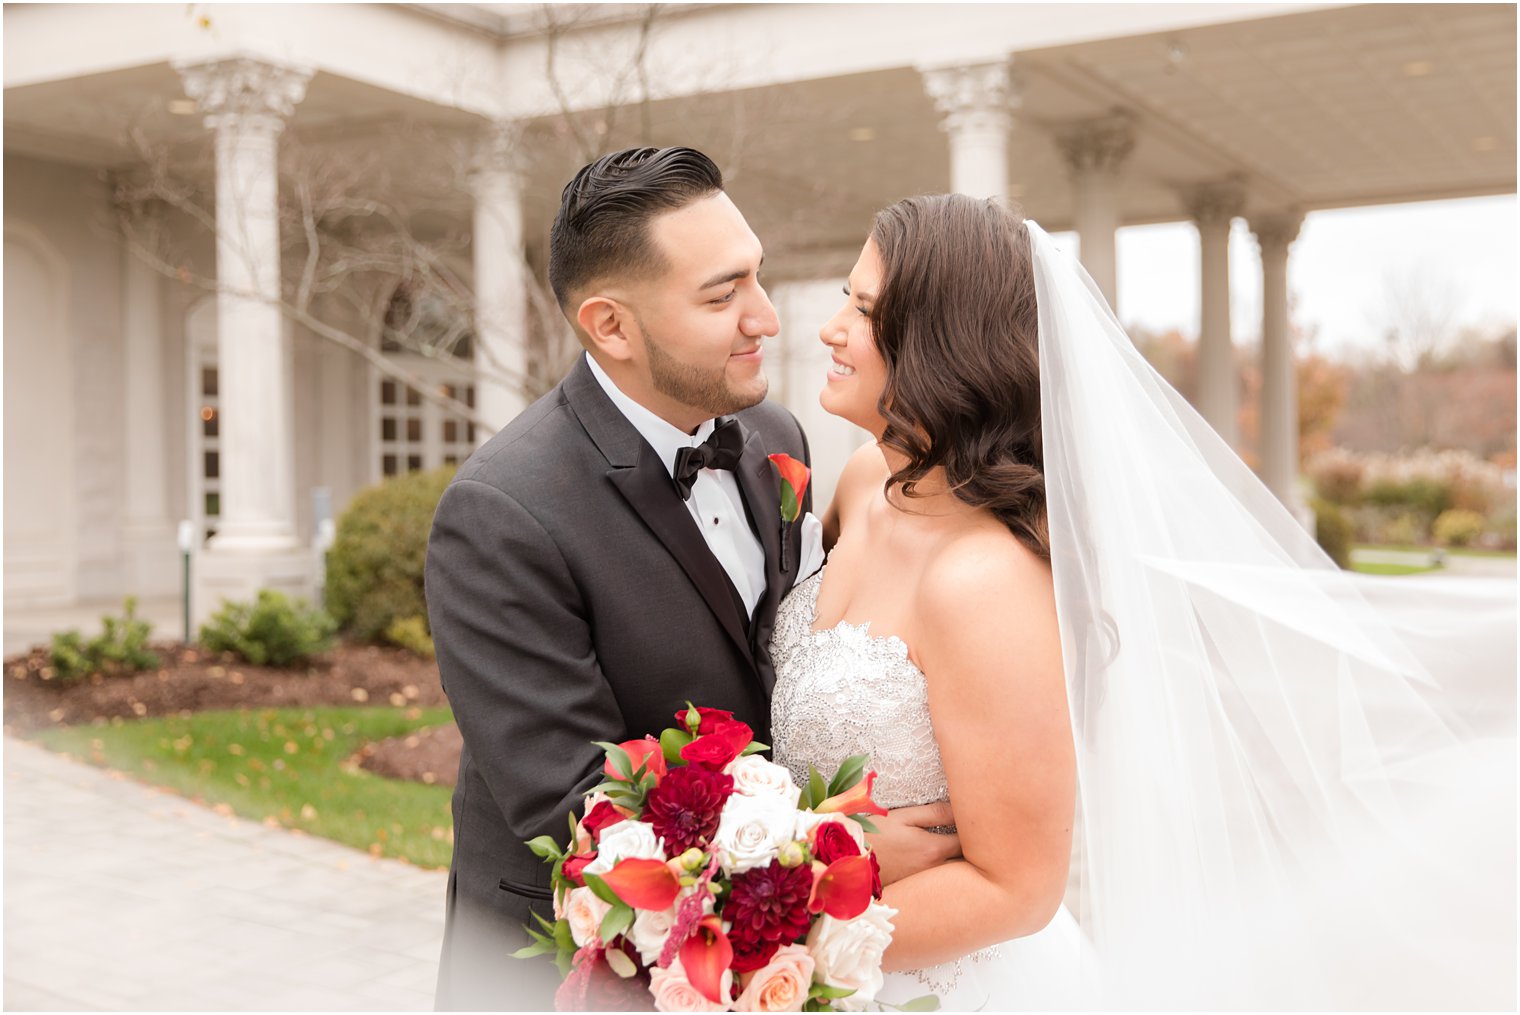 New Jersey wedding day portraits with Idalia Photography